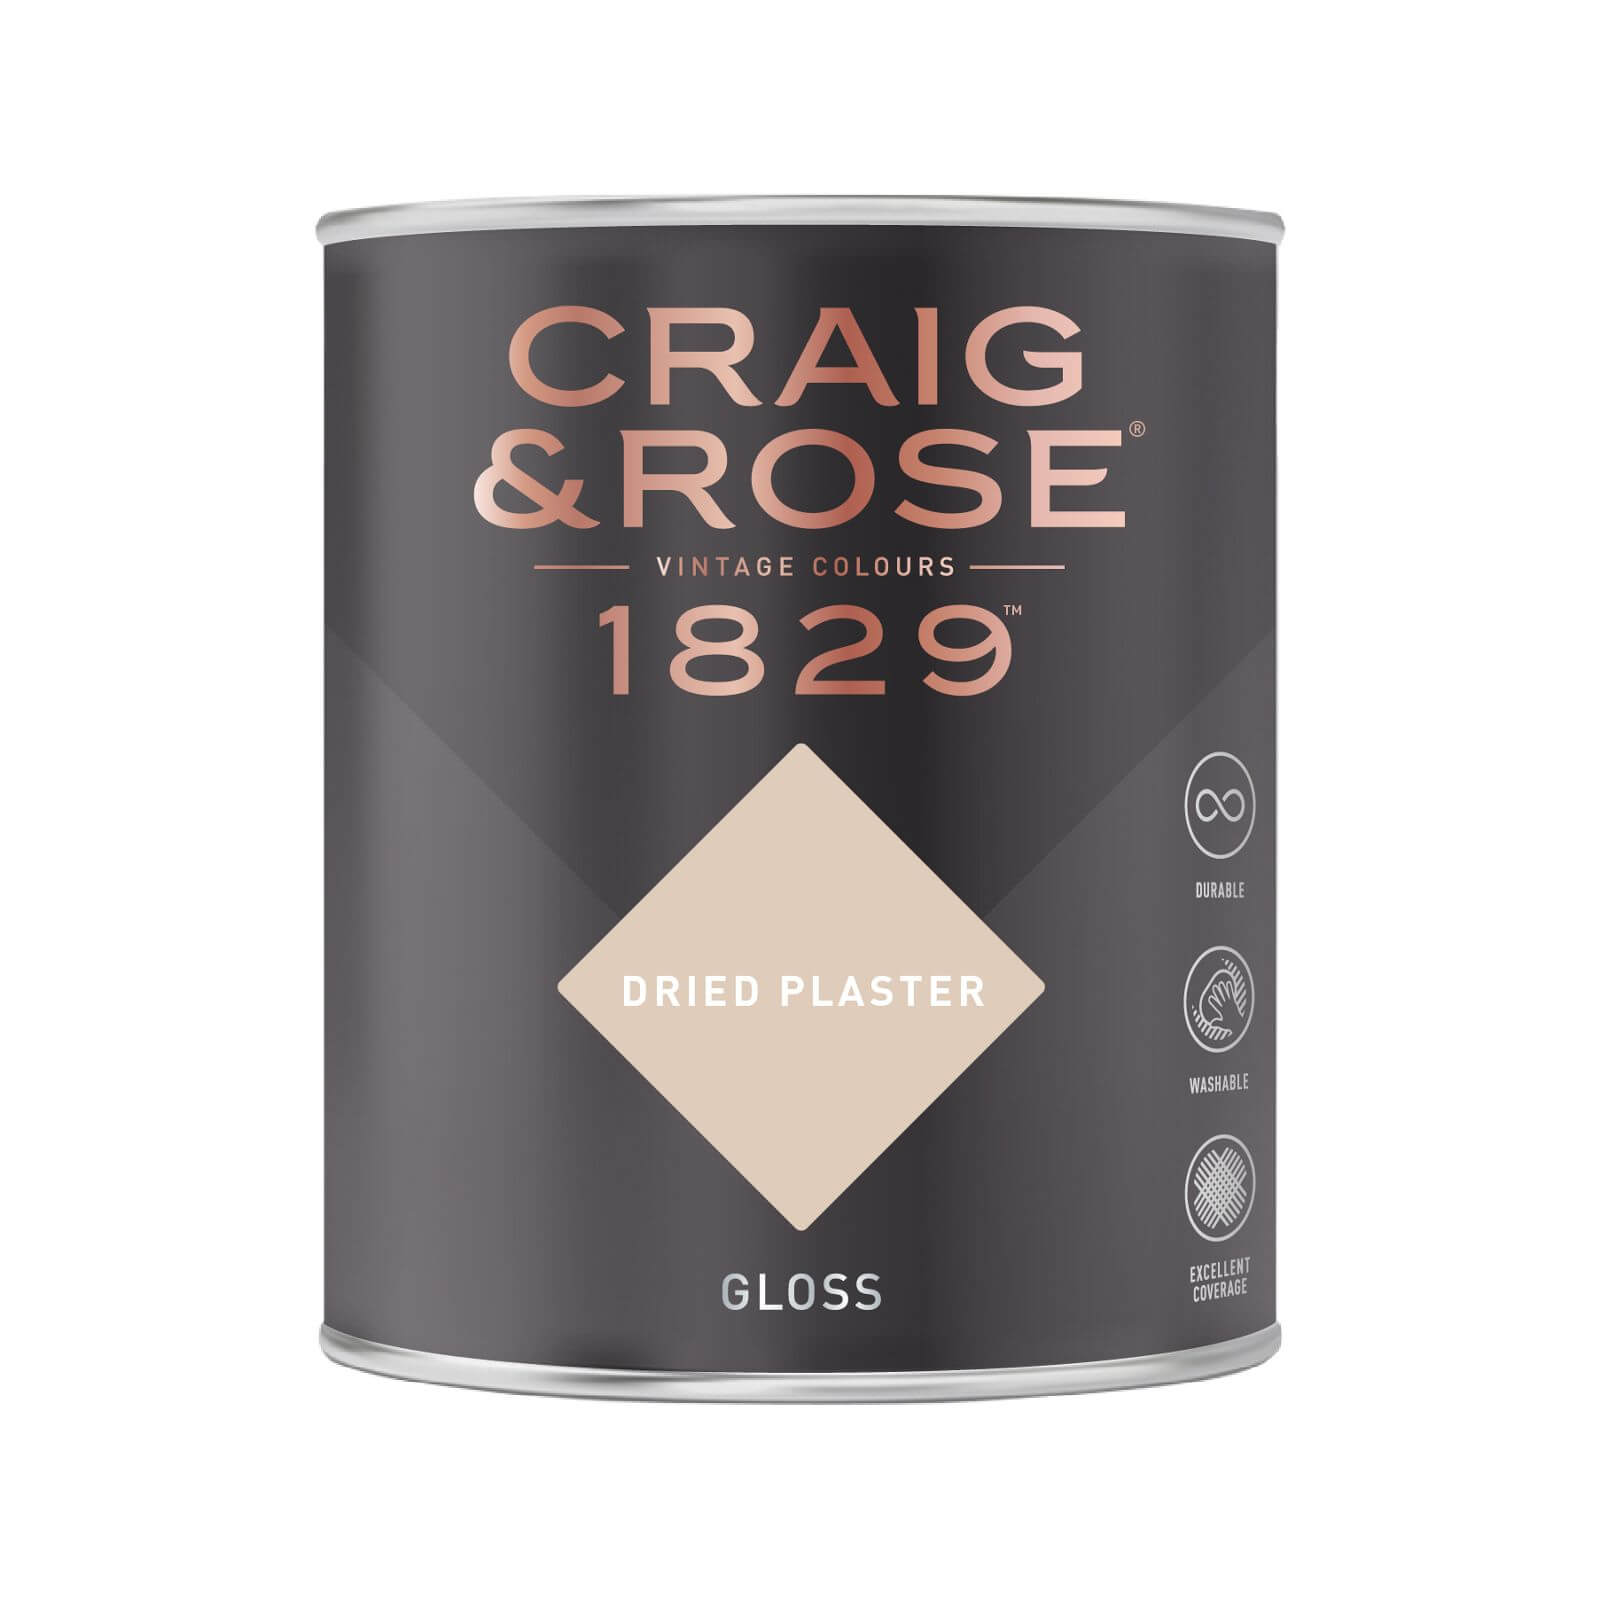 Craig & Rose 1829 Gloss Paint Dried Plaster - 750ml